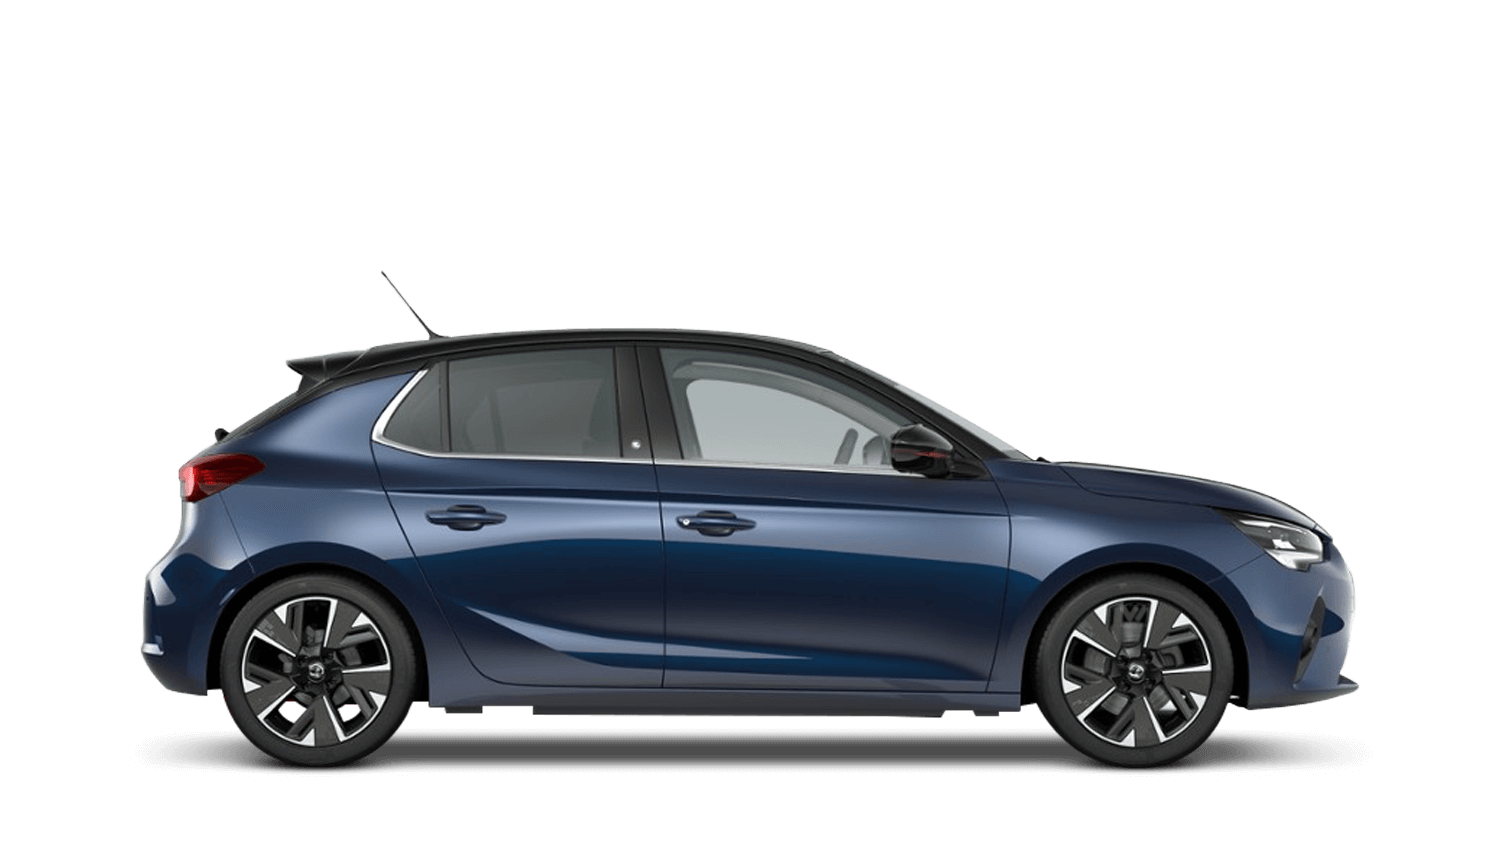 Navy Blue (Metallic) Vauxhall Corsa-e